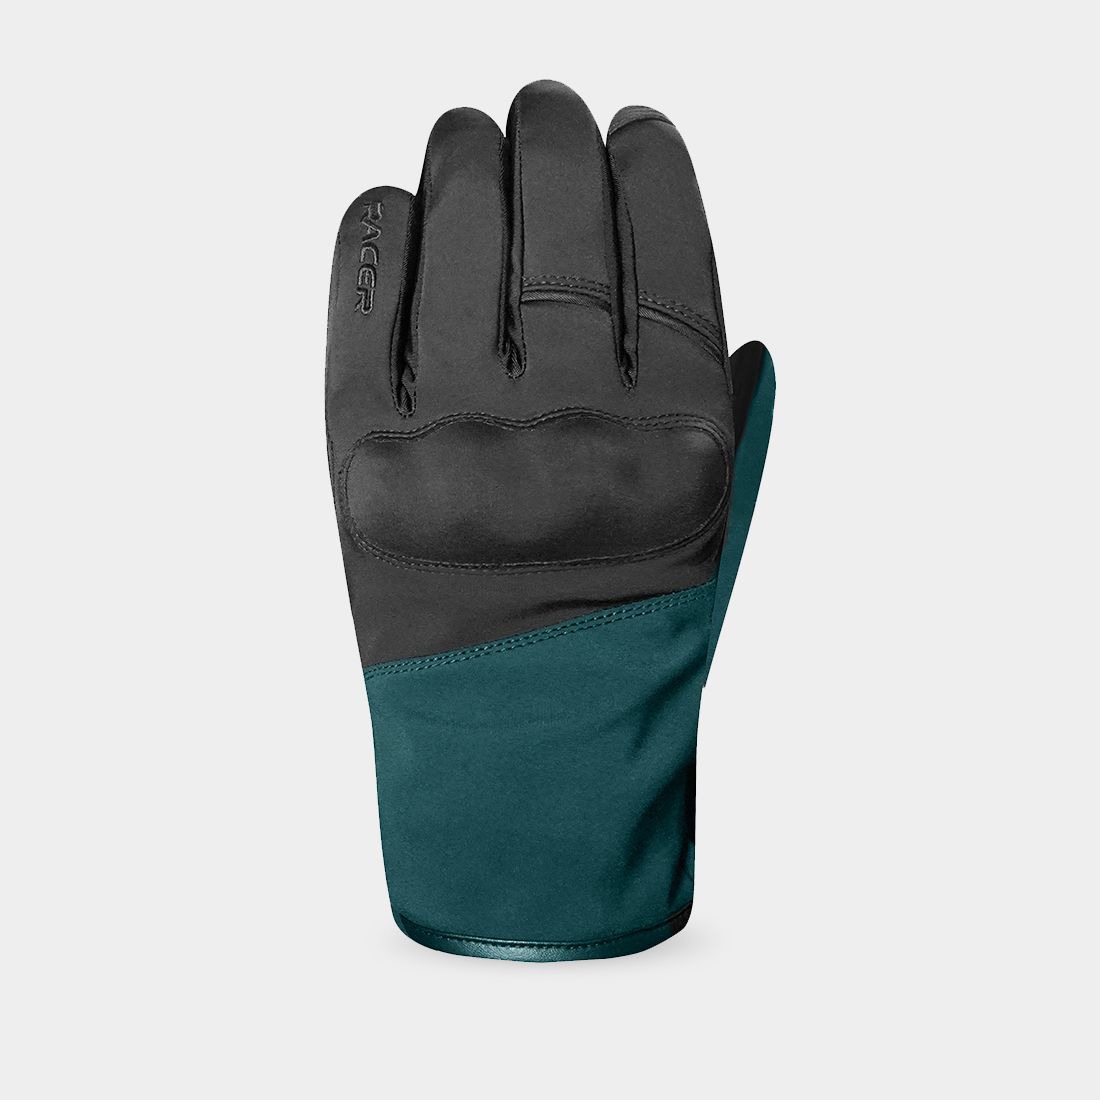 gloves WILDRY F, RACER, lady (black/teal)